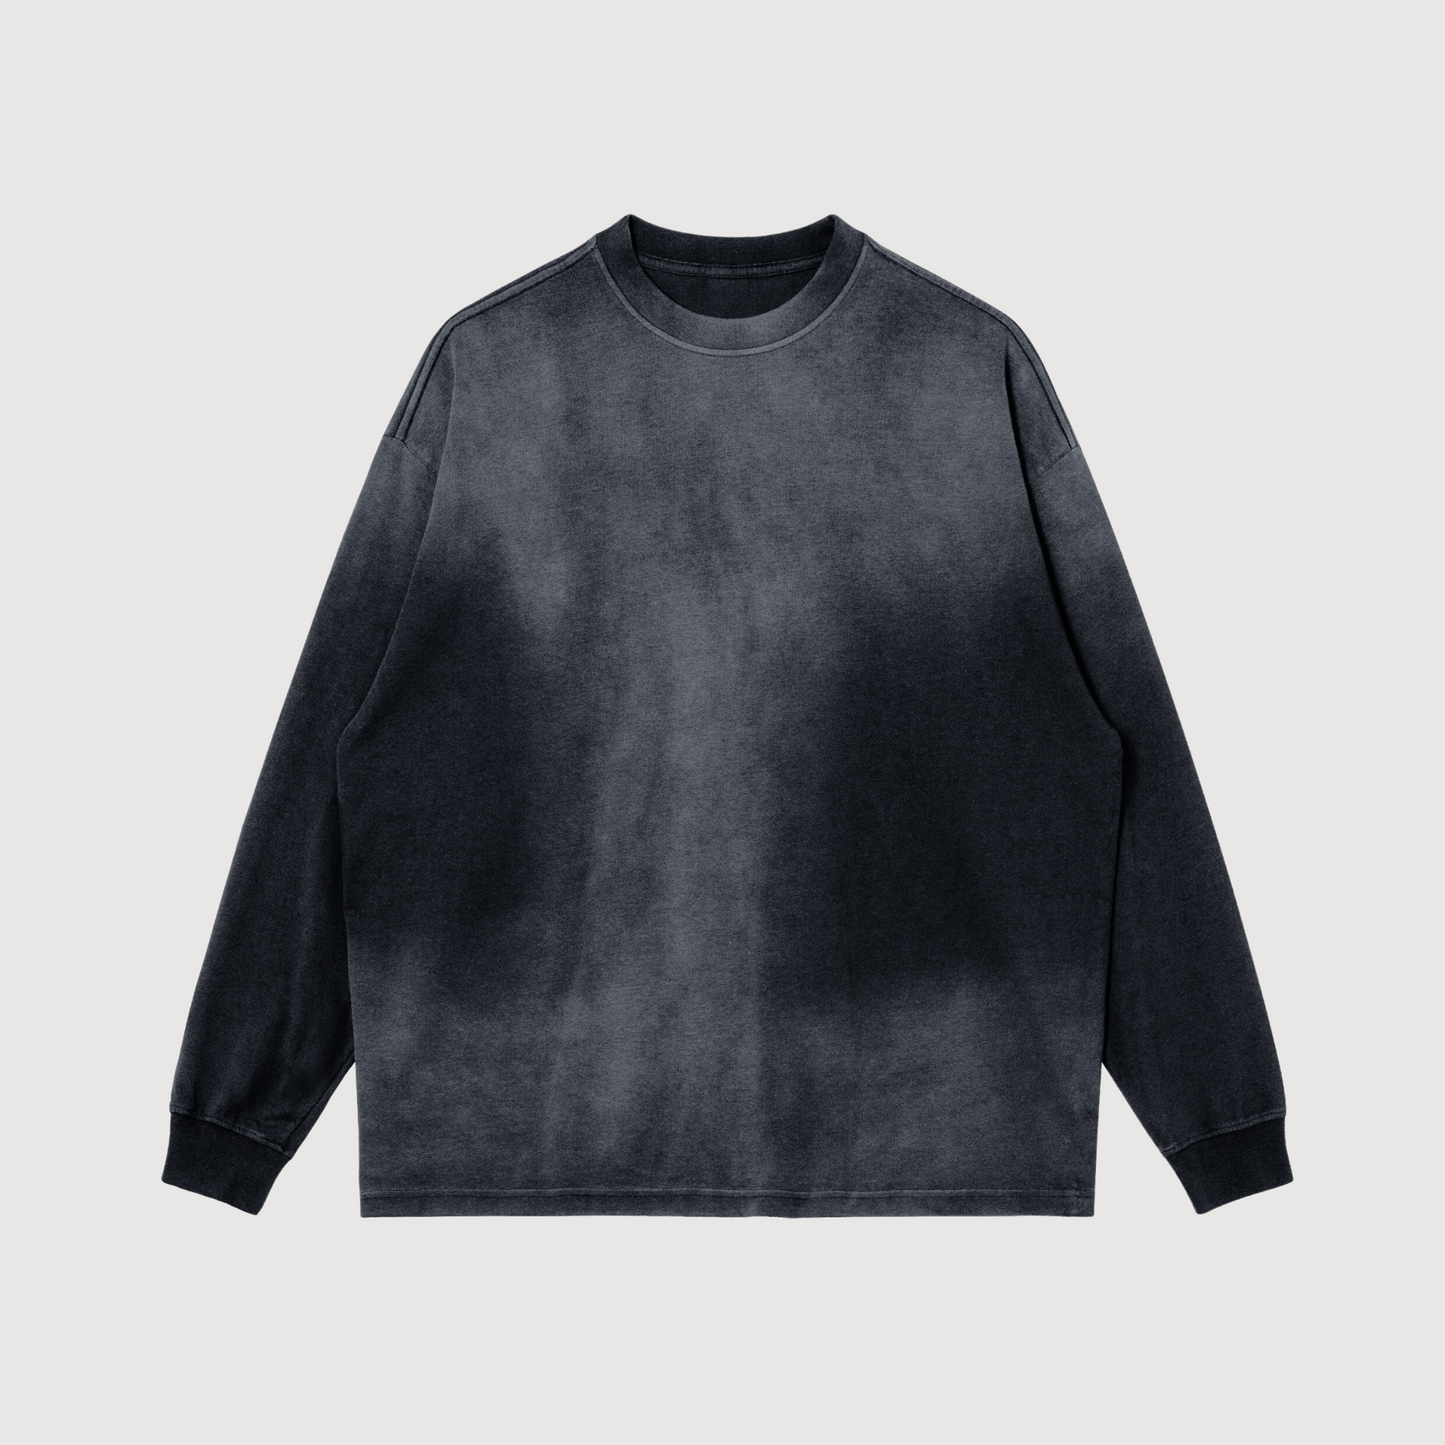 Black and grey oversized crewneck drop shoulder streetwear sweatshirt